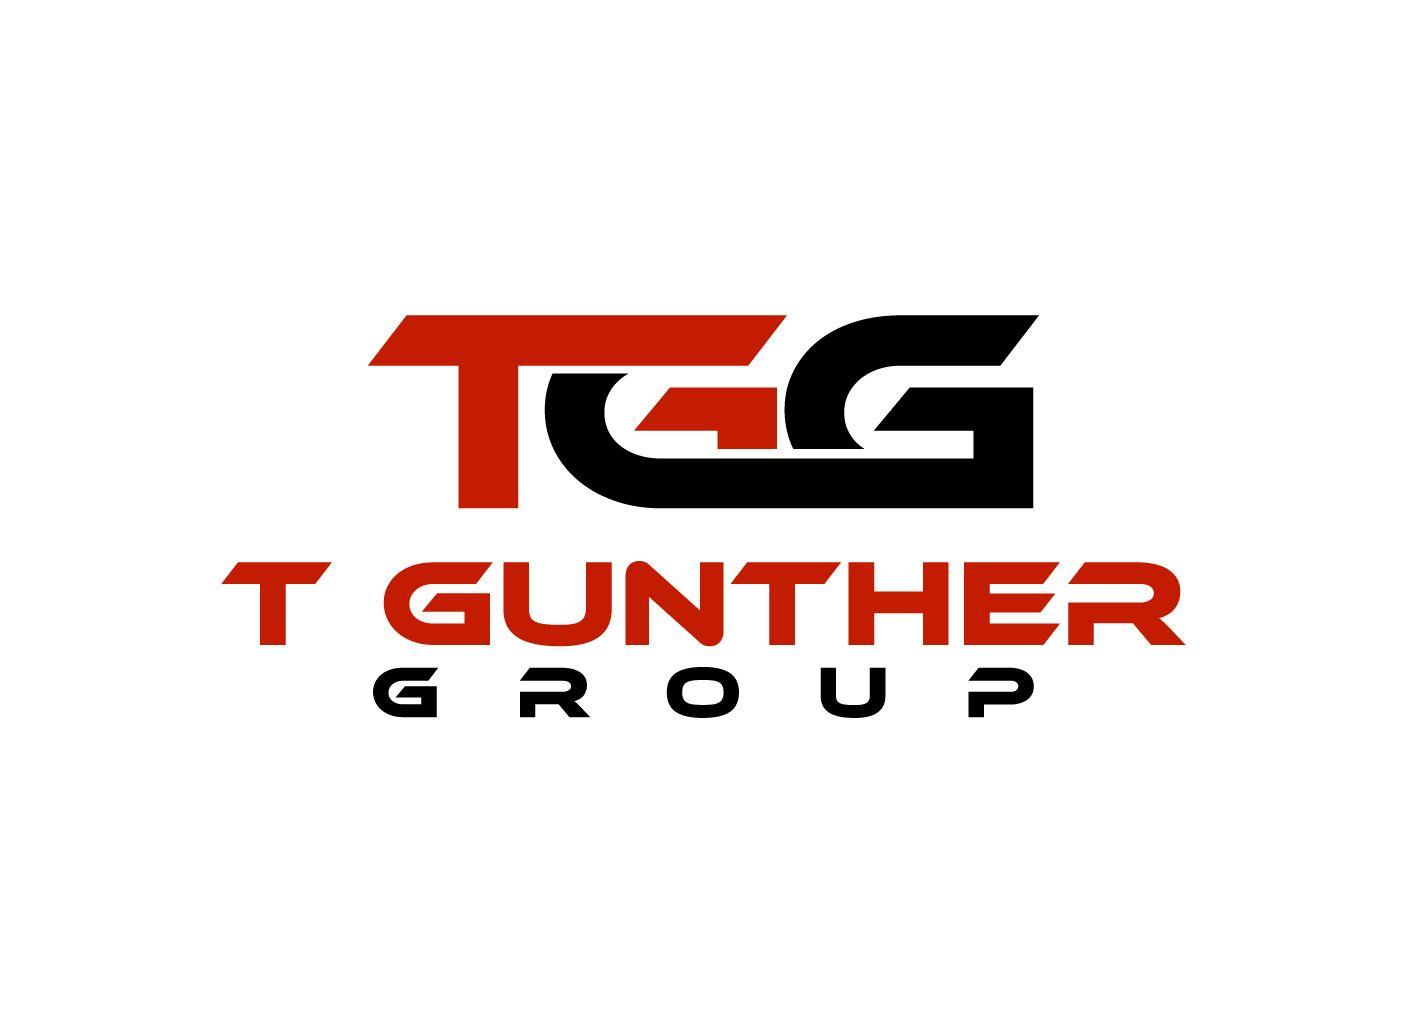 TGG Logo - Elegant, Playful, It Company Logo Design for TGG TGunther Group by ...